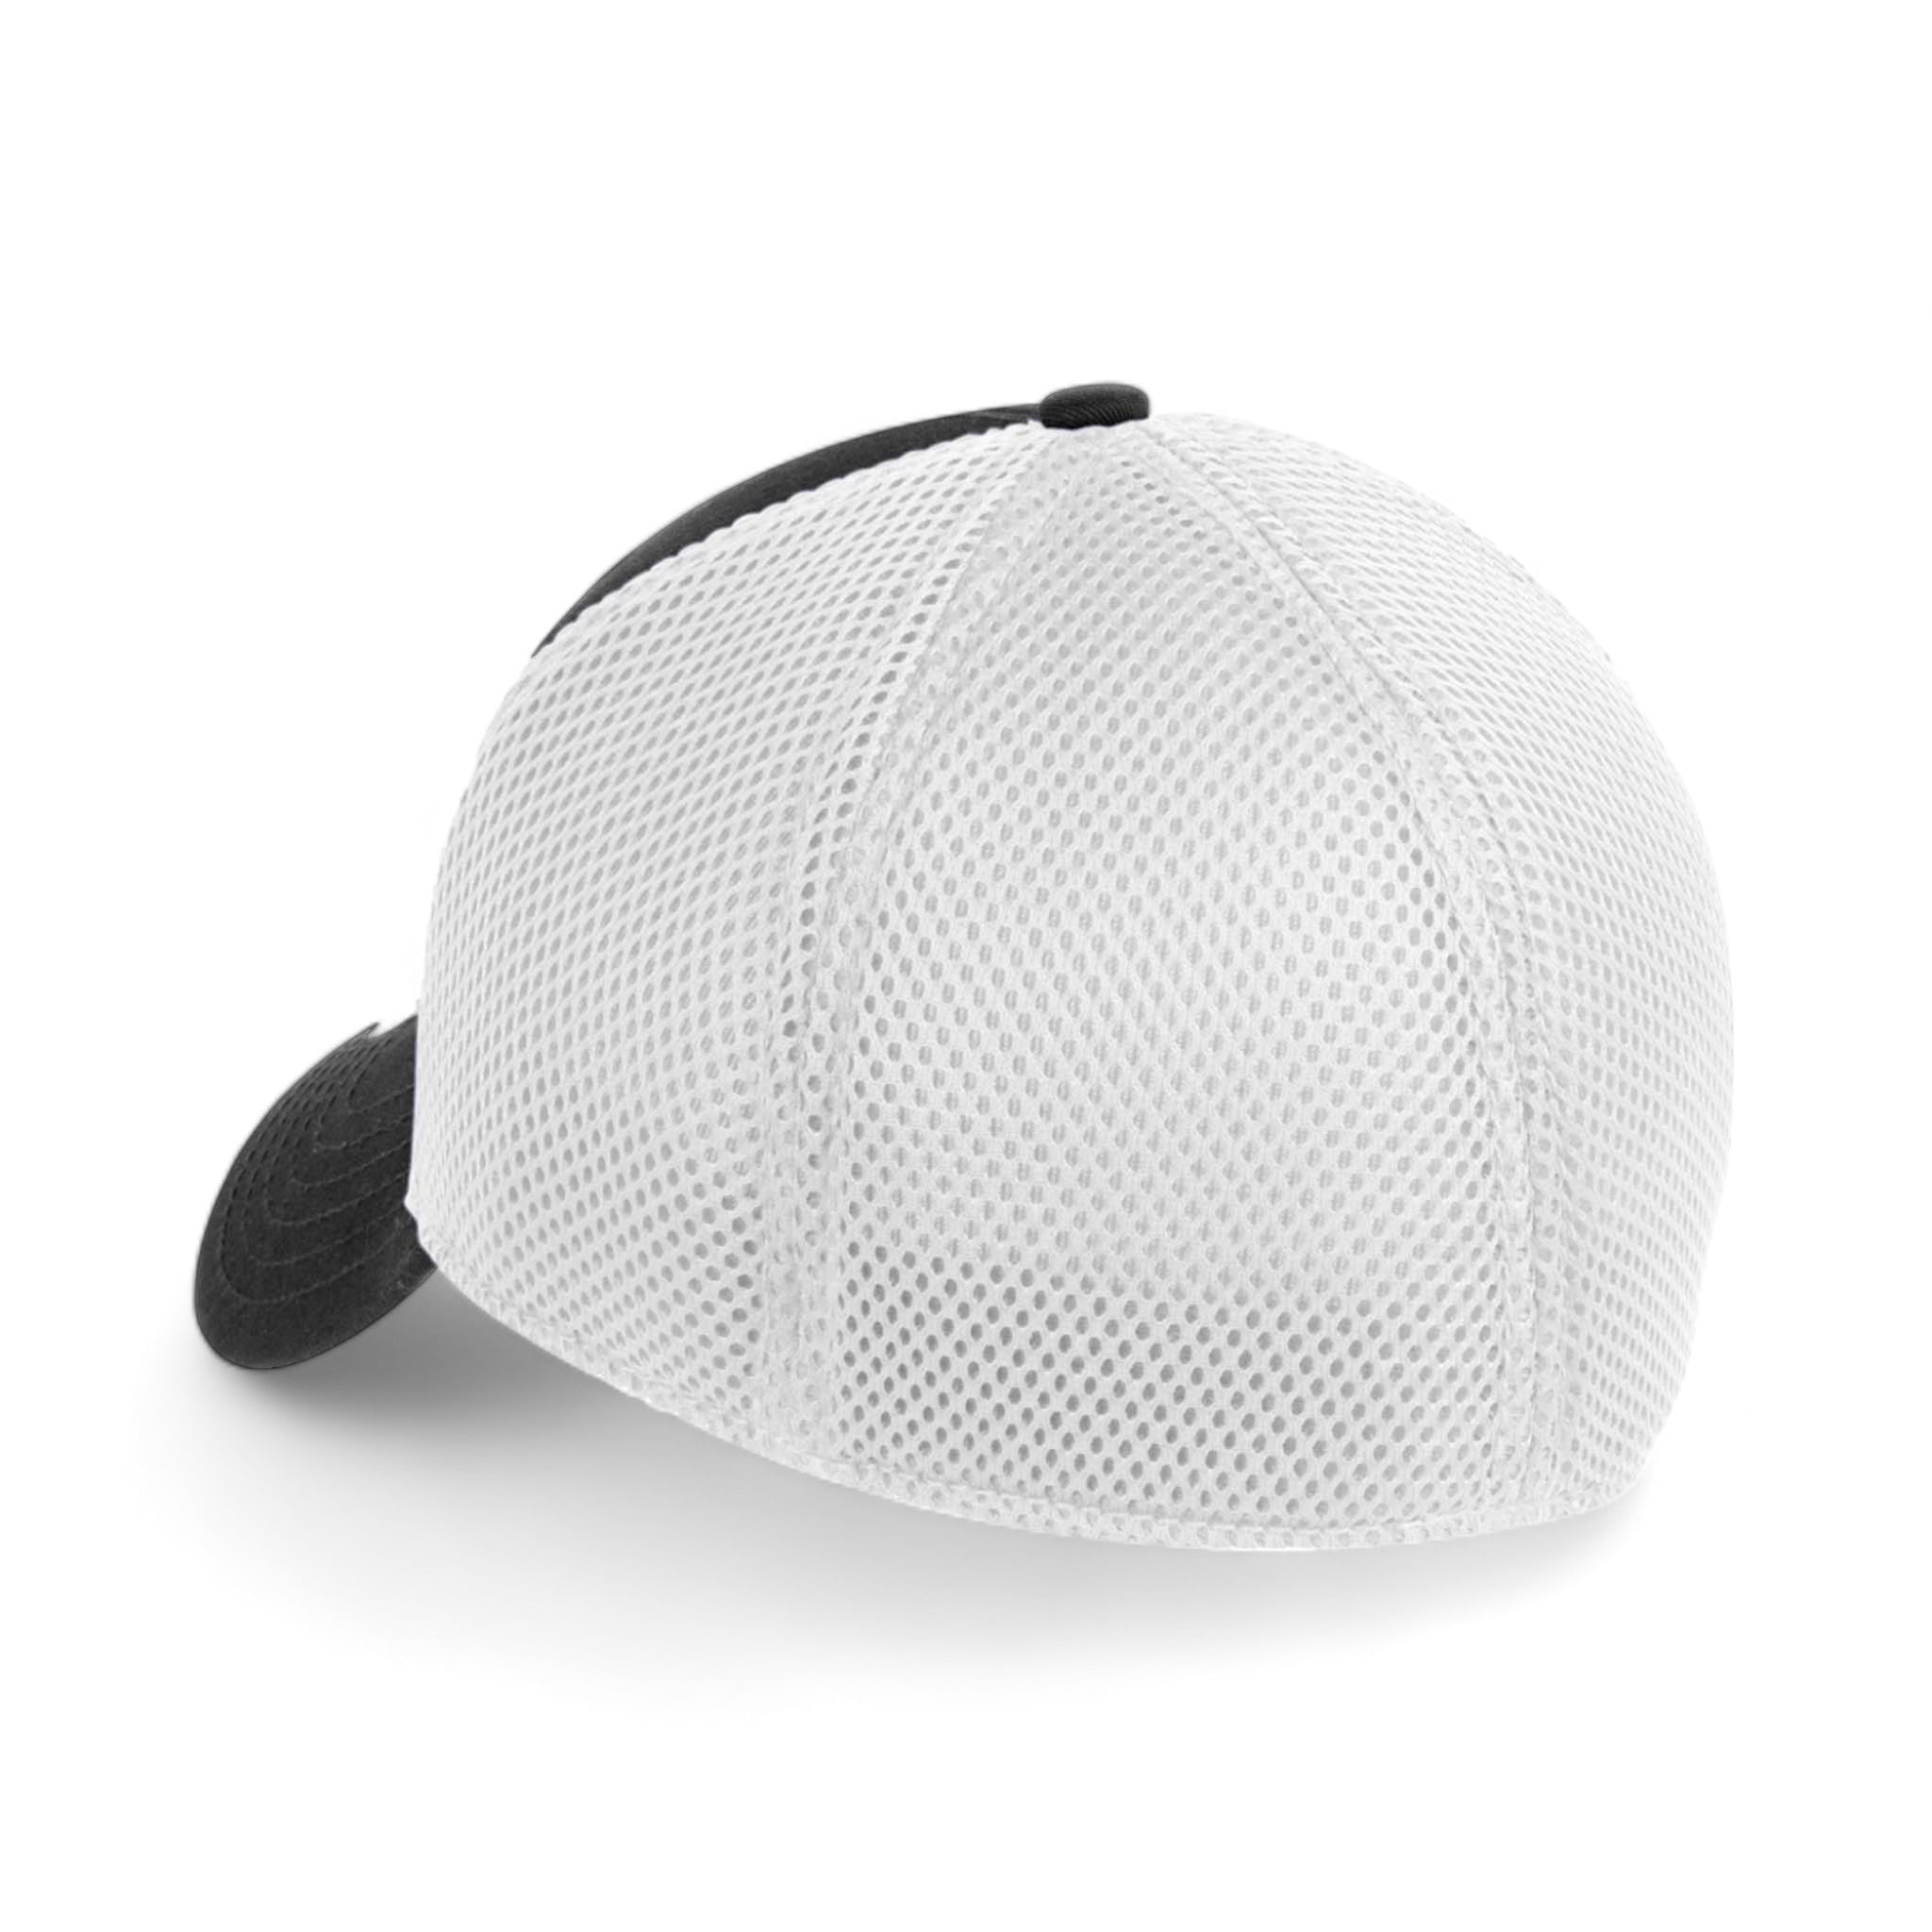 Back view of New Era NE1020 custom hat in black and white